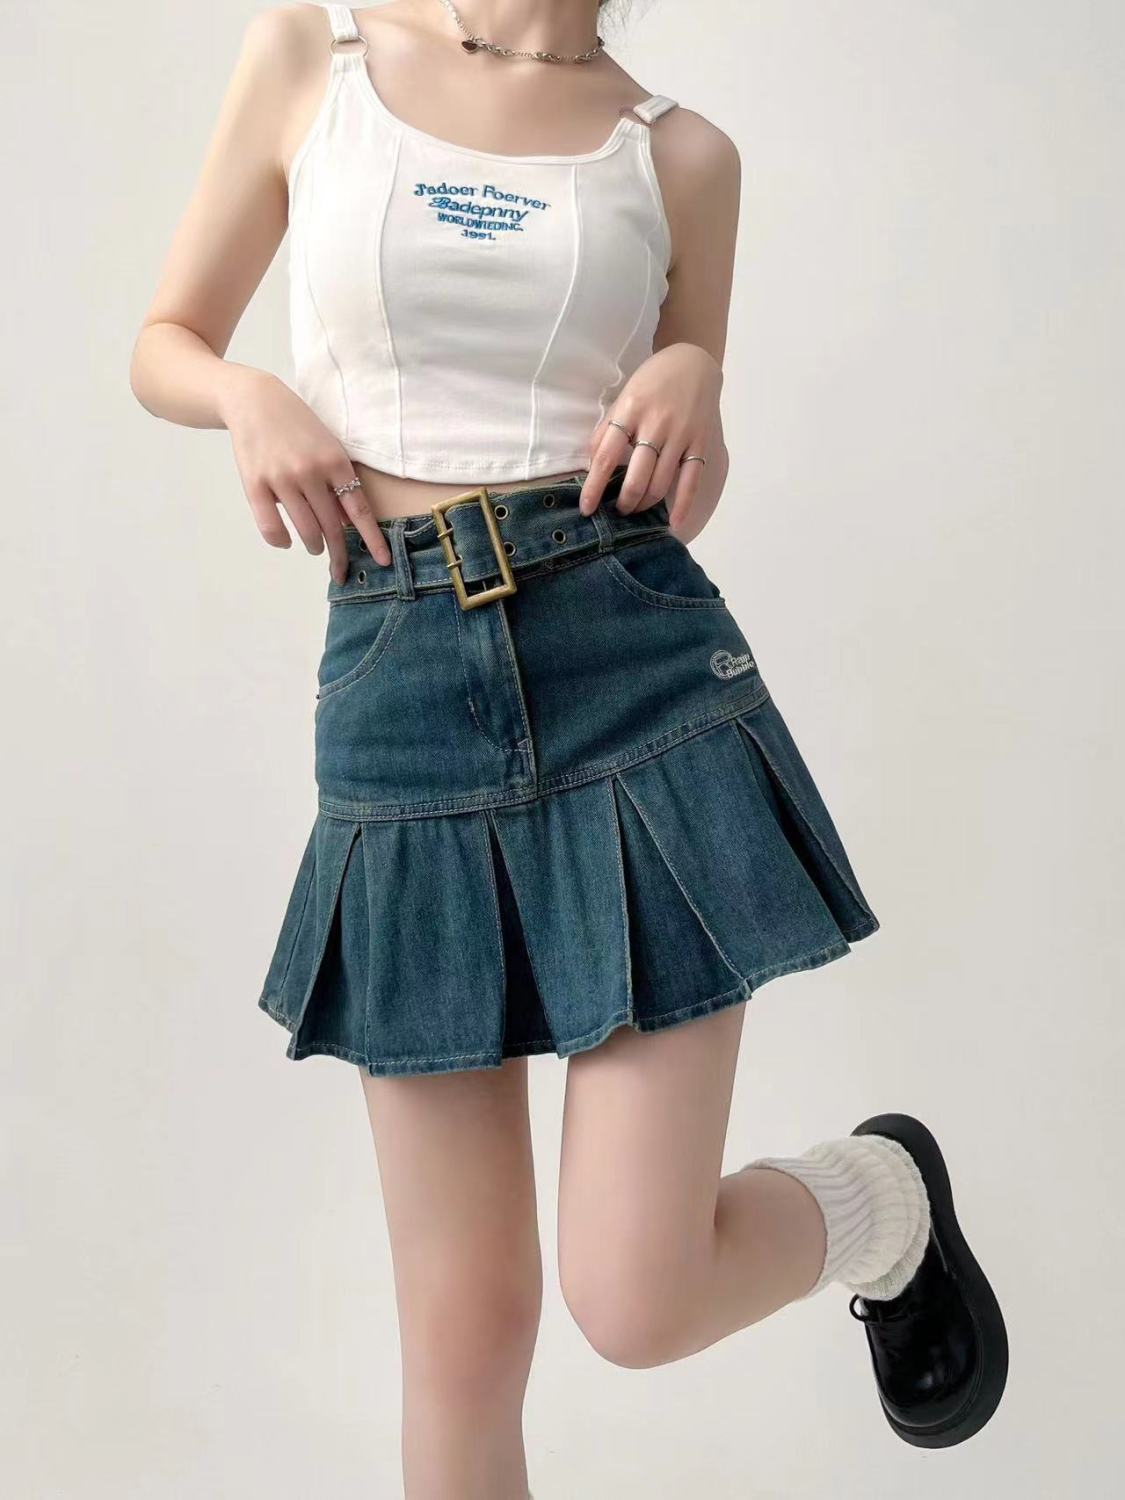 Design sense niche hot girl retro denim skirt female summer bag hip culottes a-line skirt pleated skirt American trend